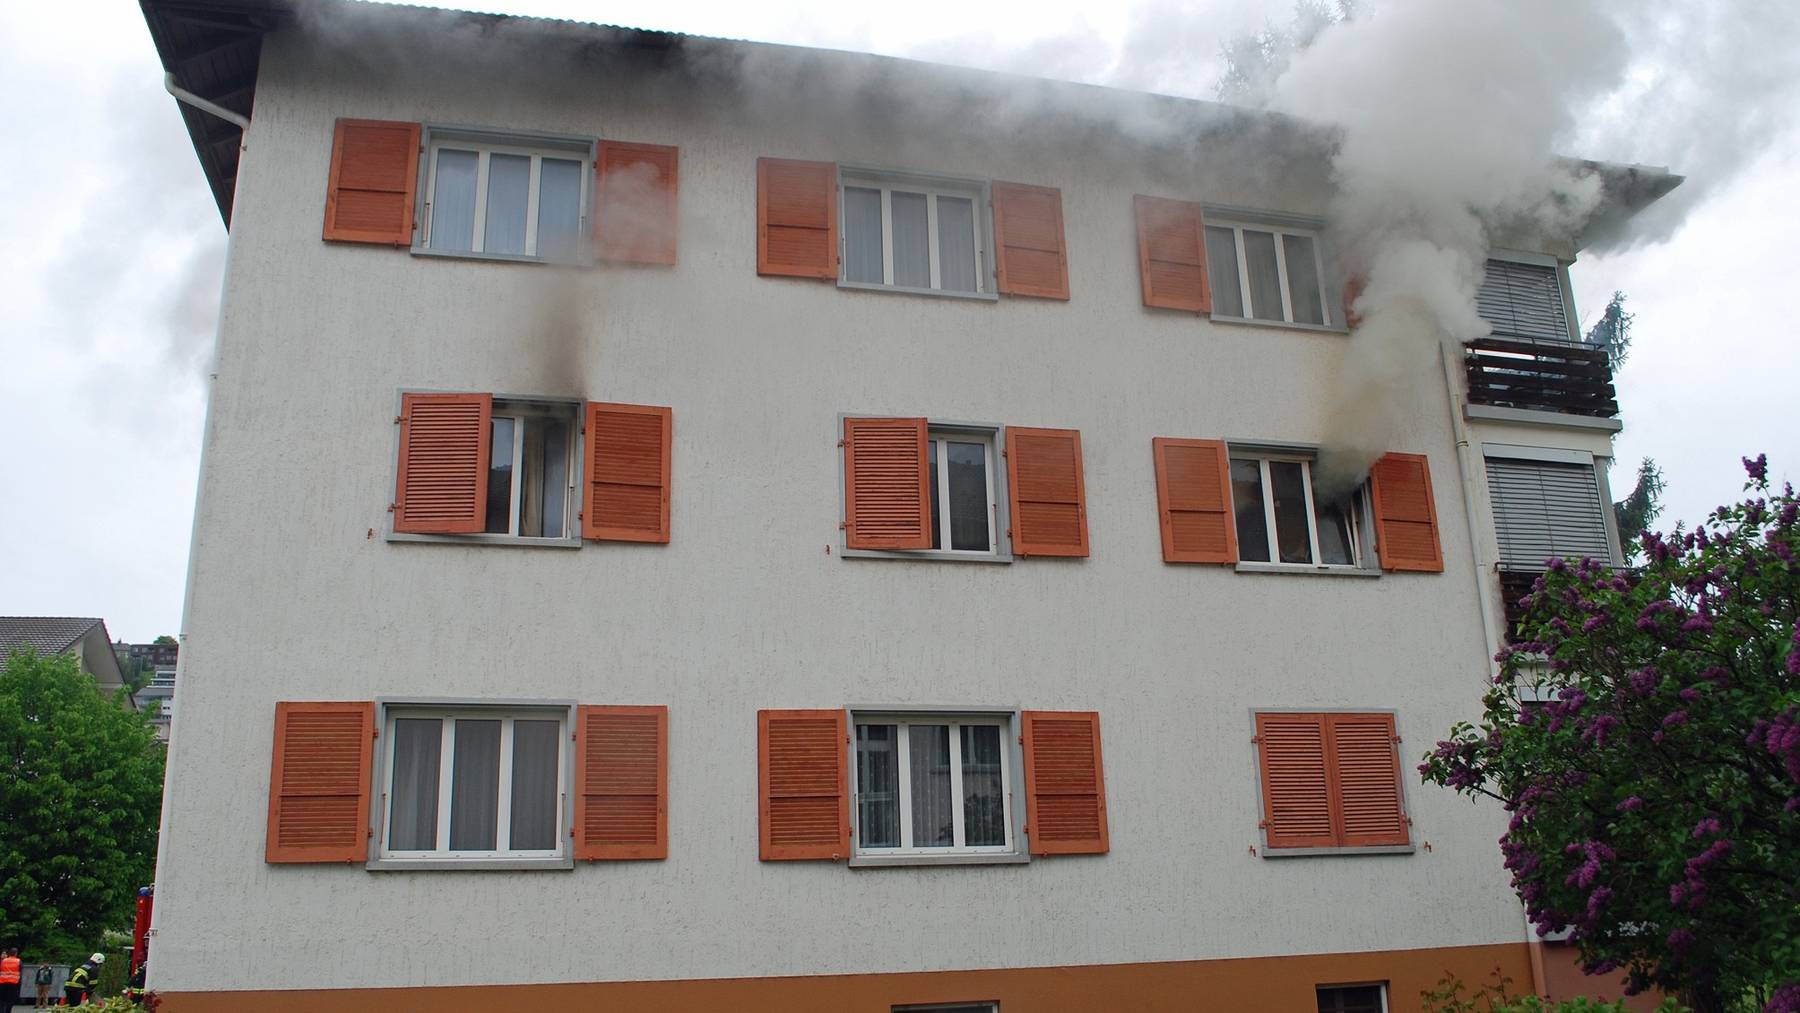 Brand in Mehrfamilienhaus in Kriens